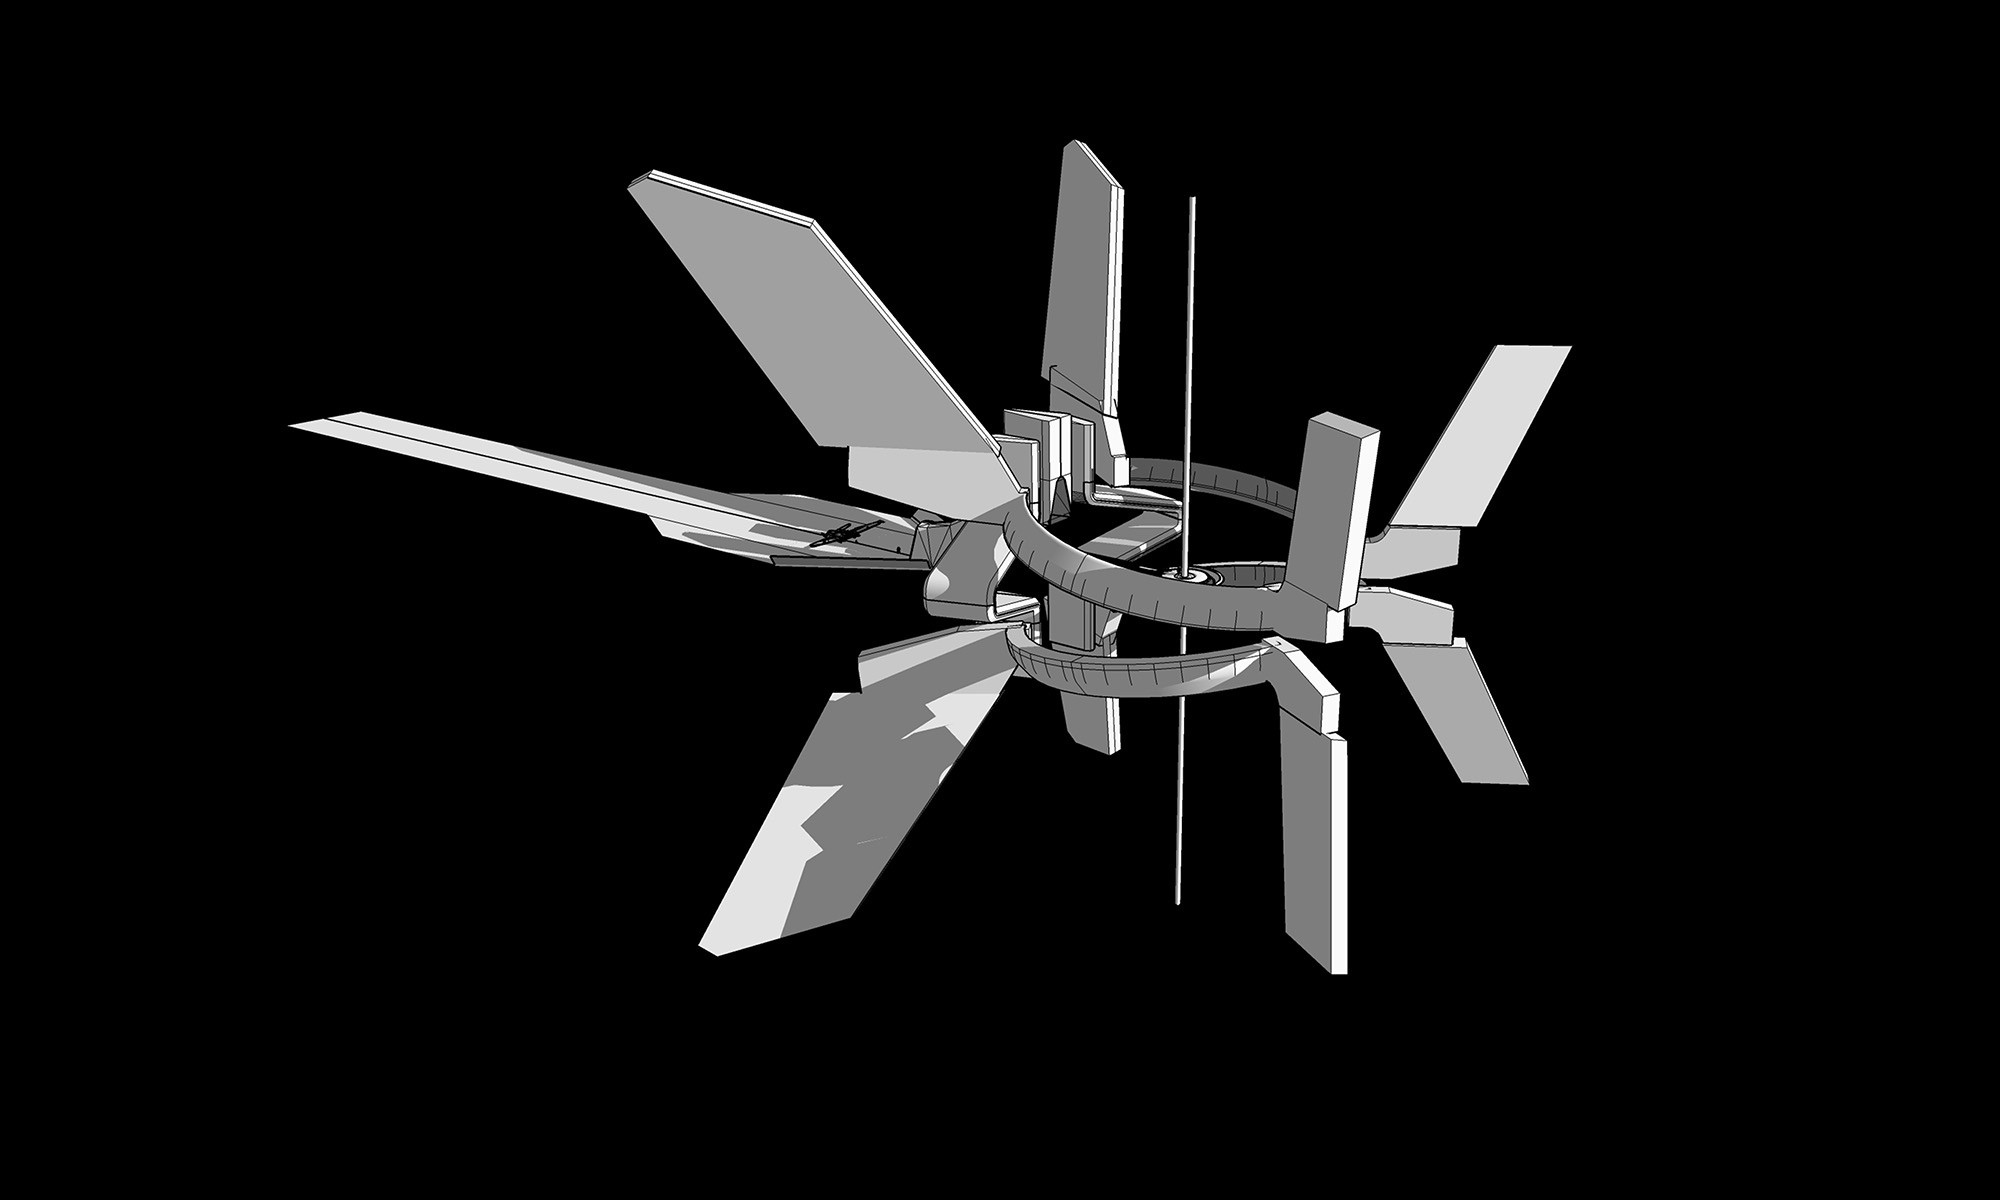 Underlay image of Darren Gilford's Sketchup model.